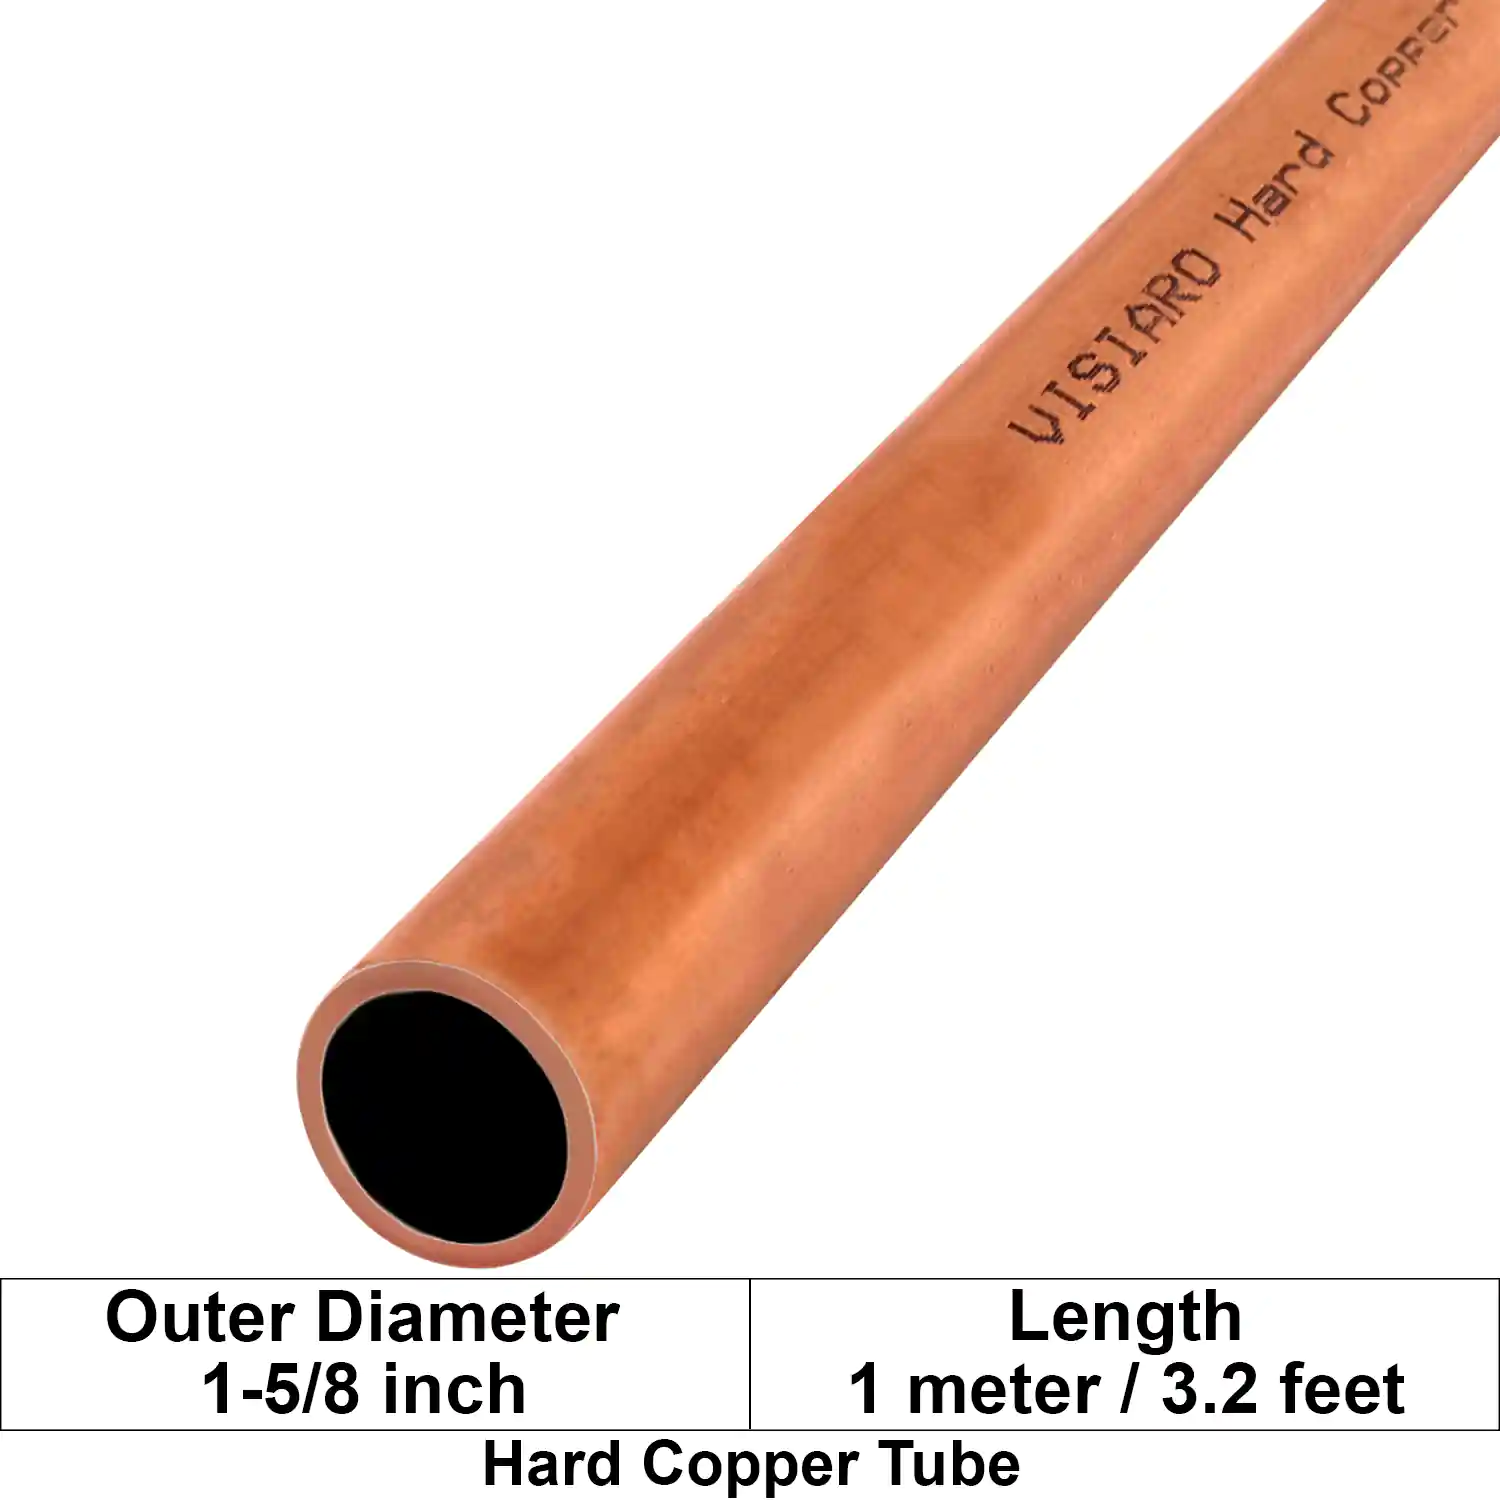 Visiaro Hard Copper Tube 1mtr long Outer Diameter - 1-5/8 inch